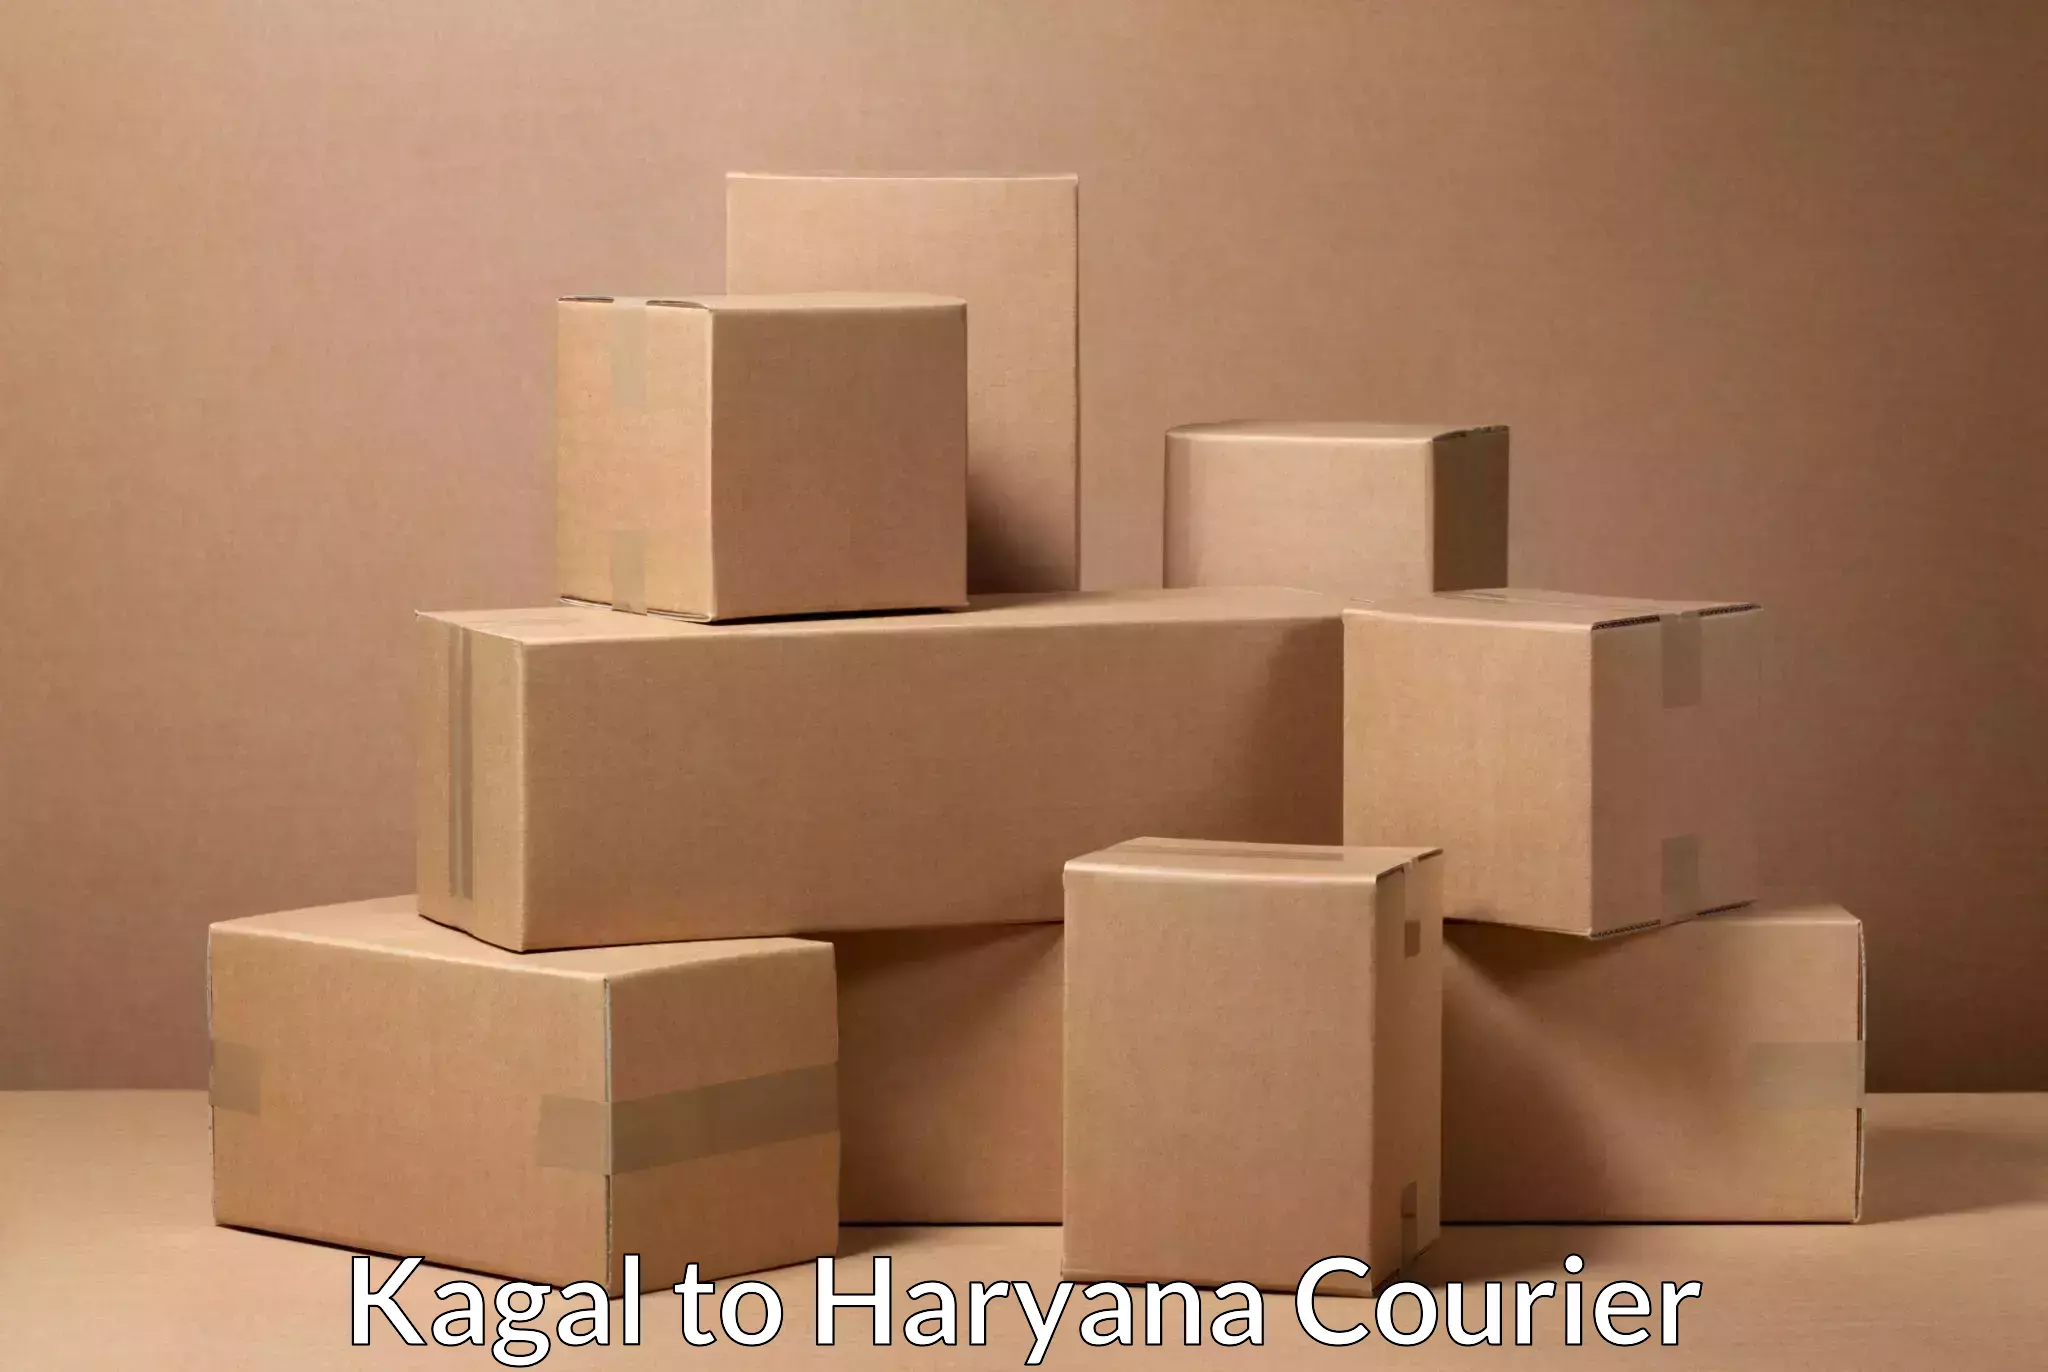 Customer-centric shipping Kagal to Haryana